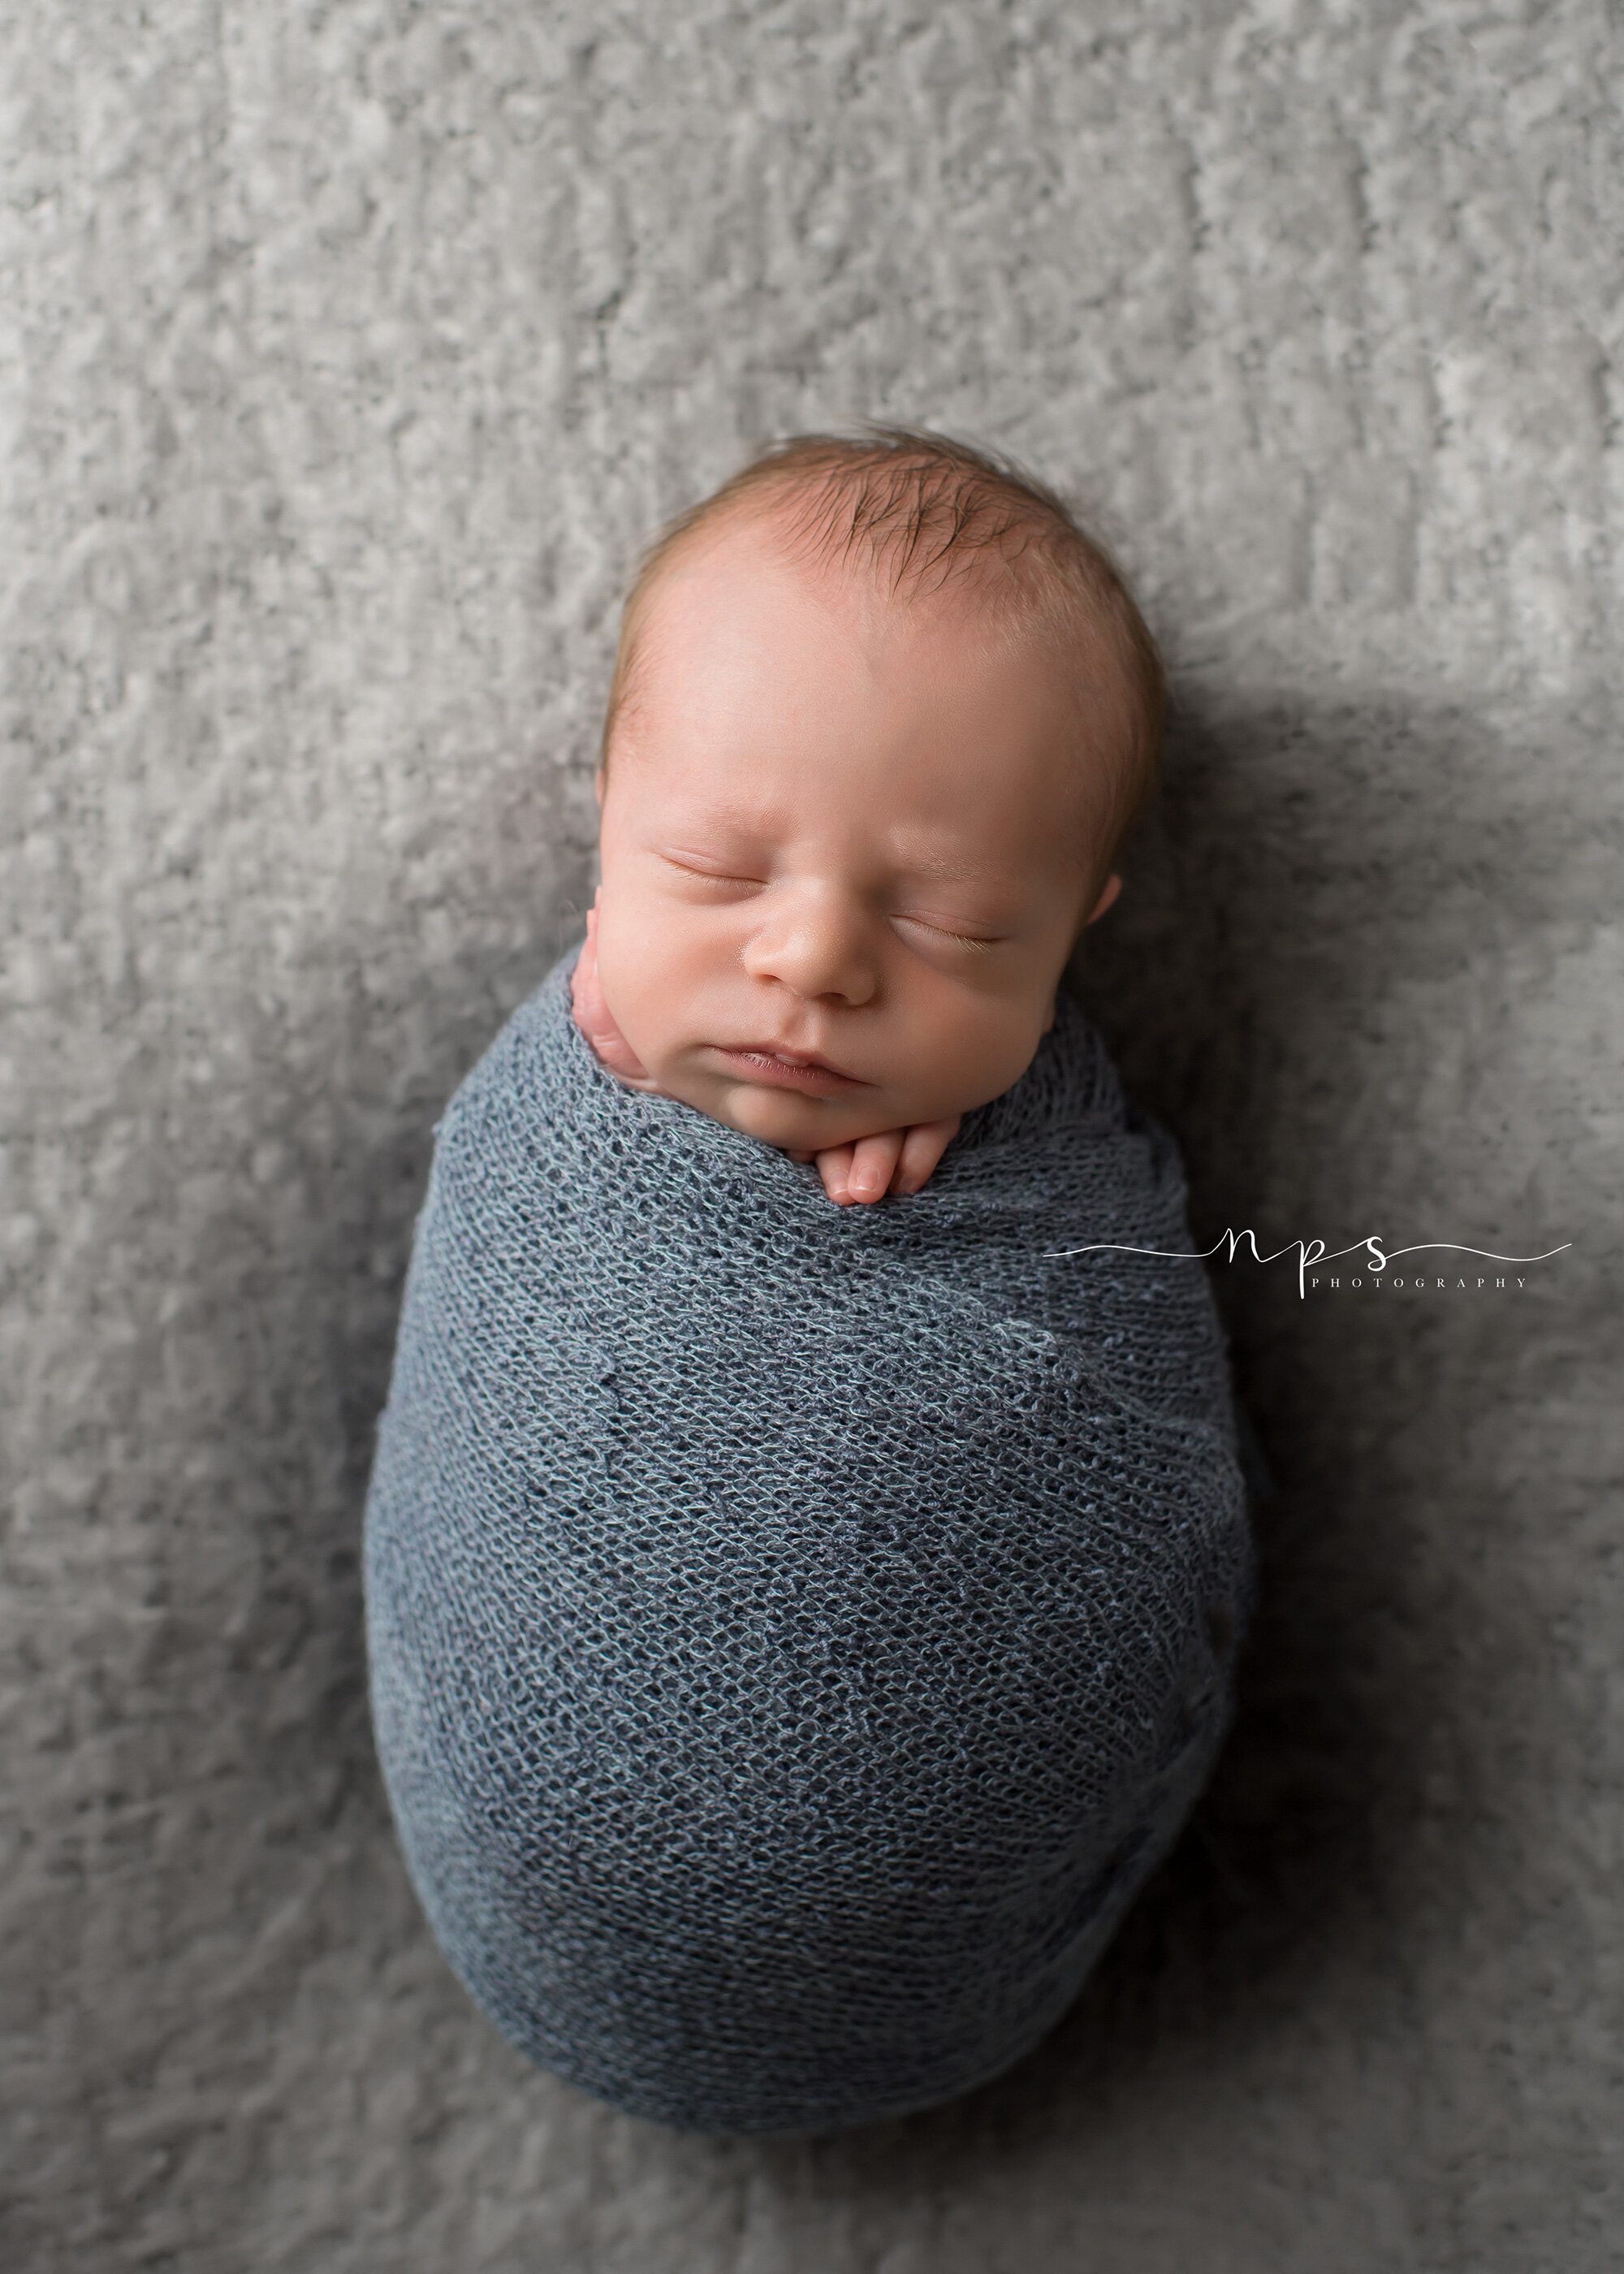 Newborn Baby Boy 006 - NPS Photography